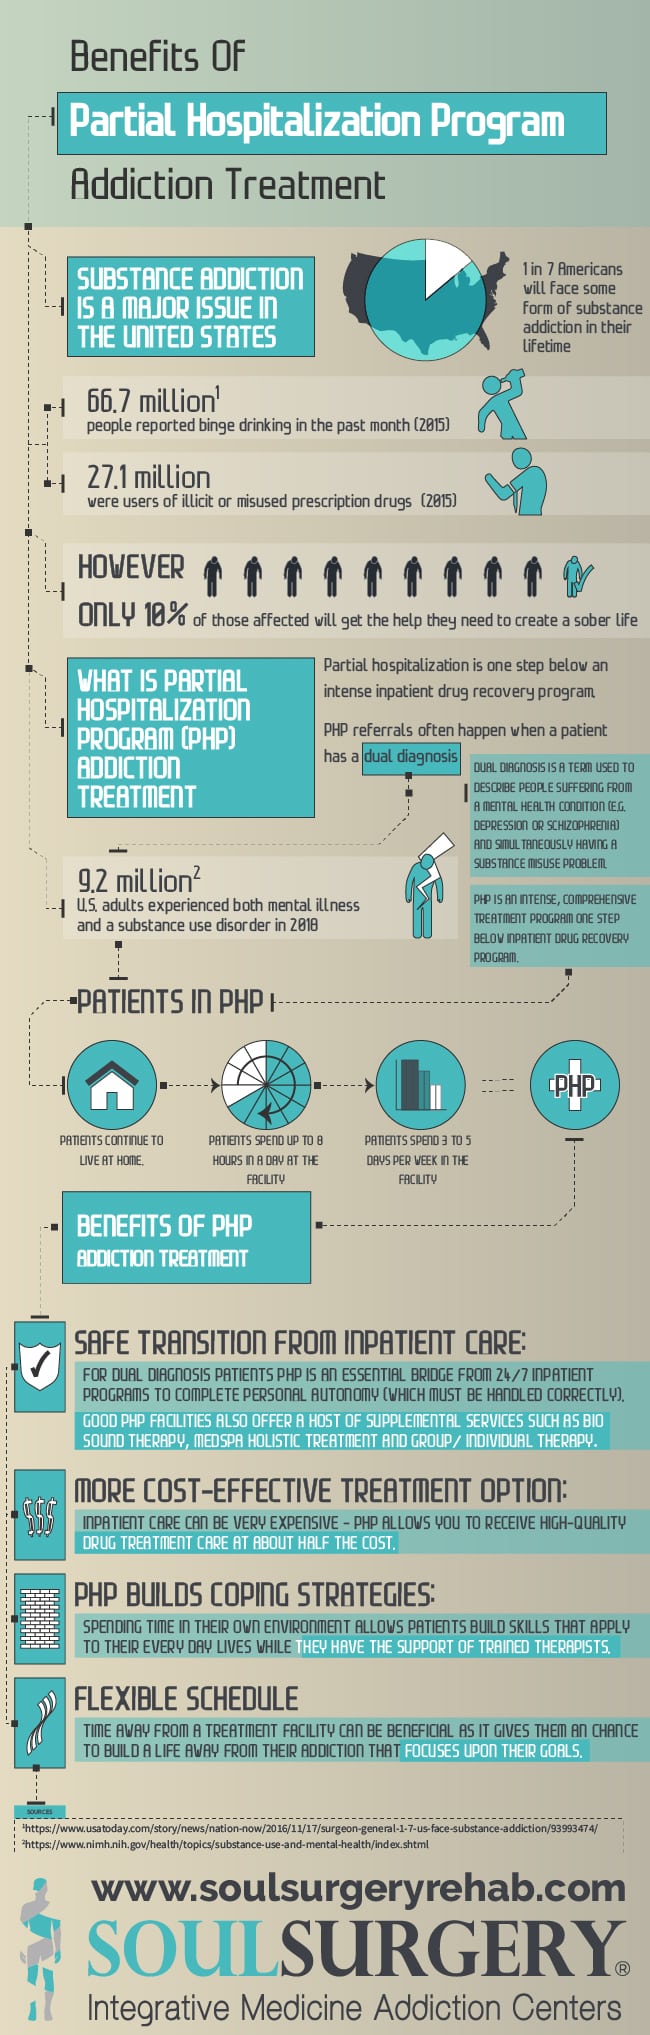 Benefits of Partial hospitalization Program